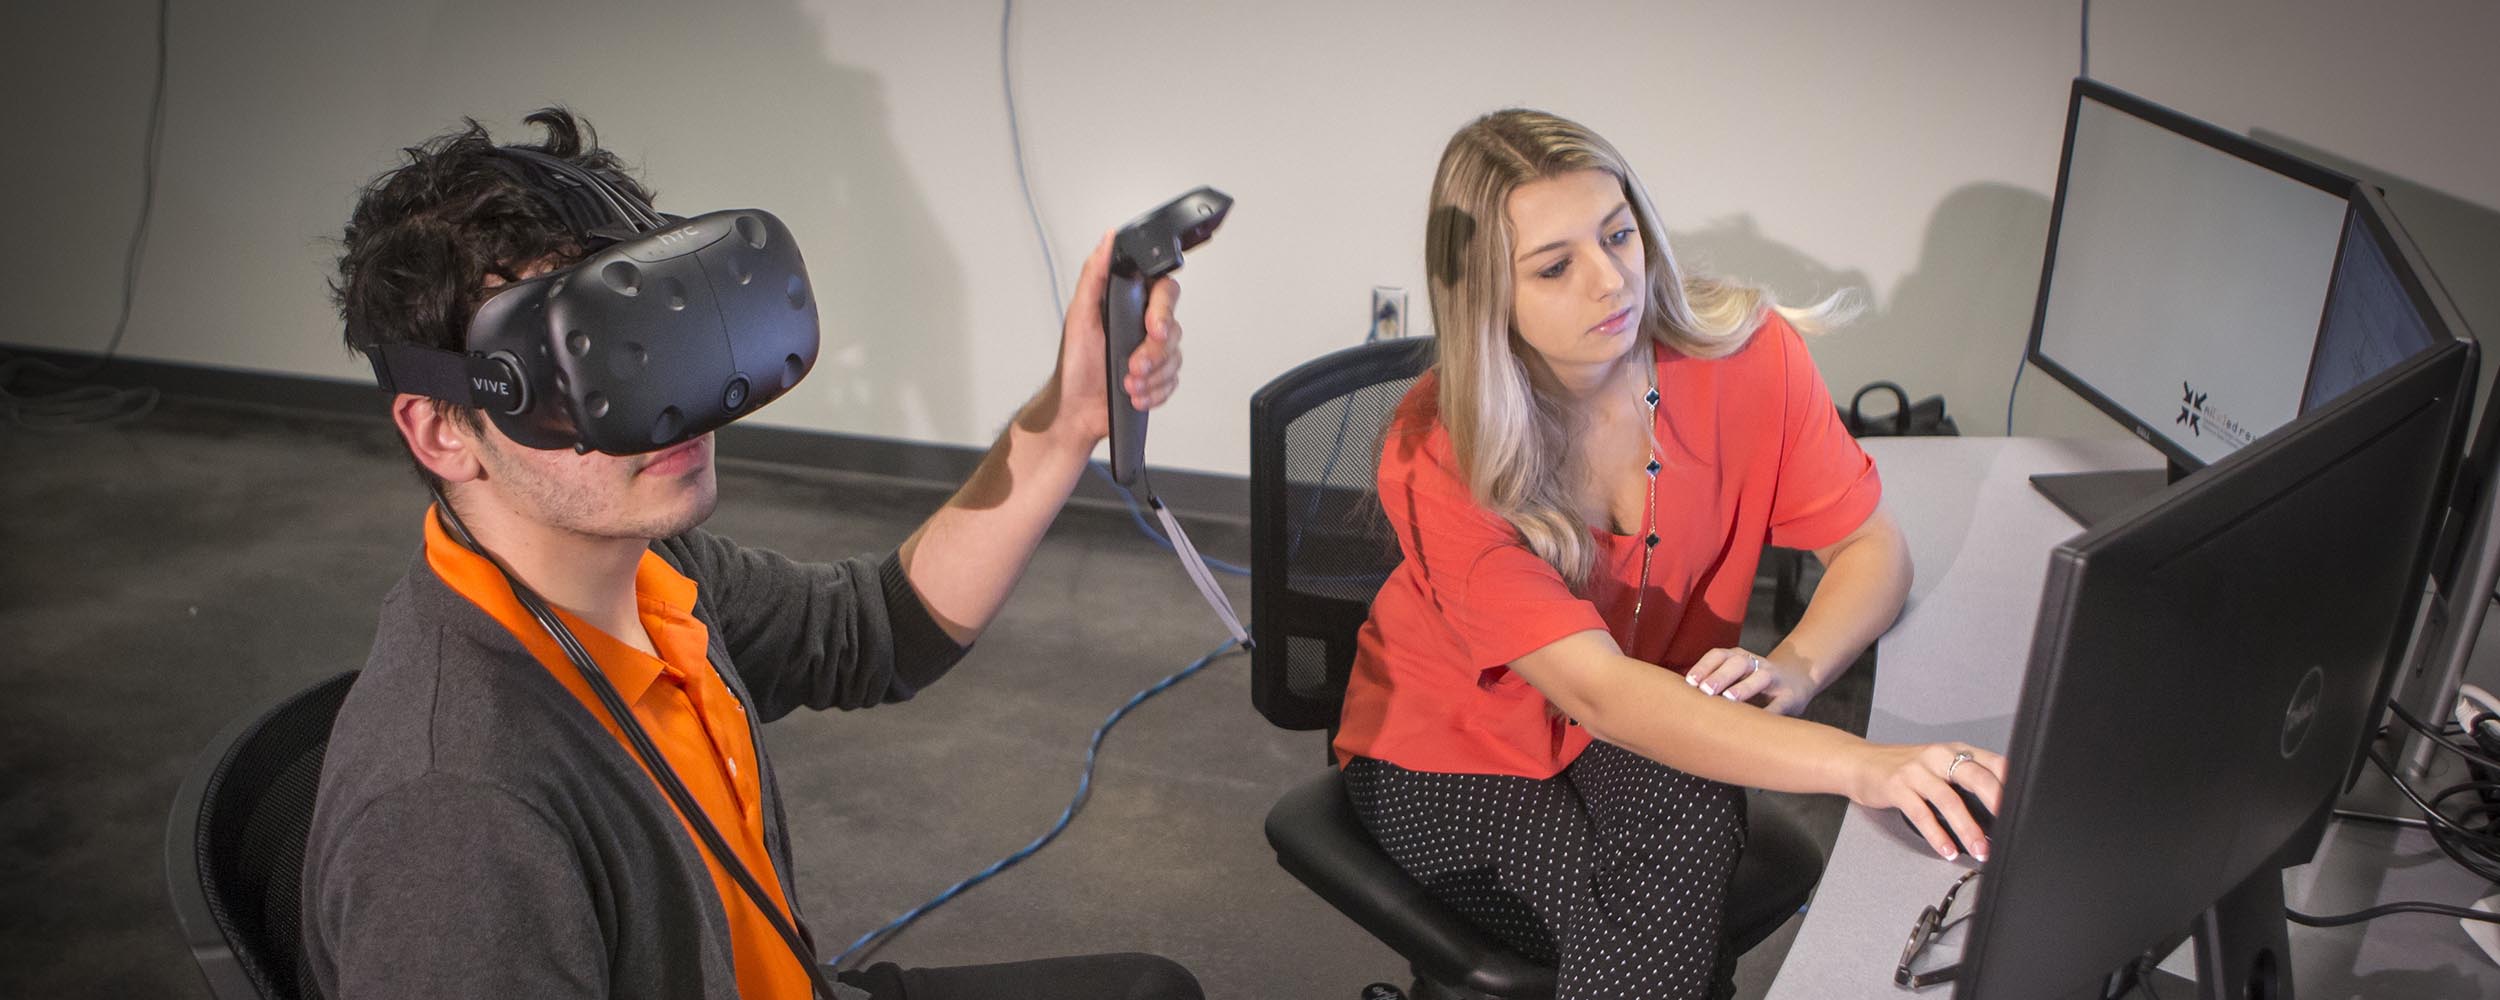 Interior design lab using virtual reality tech